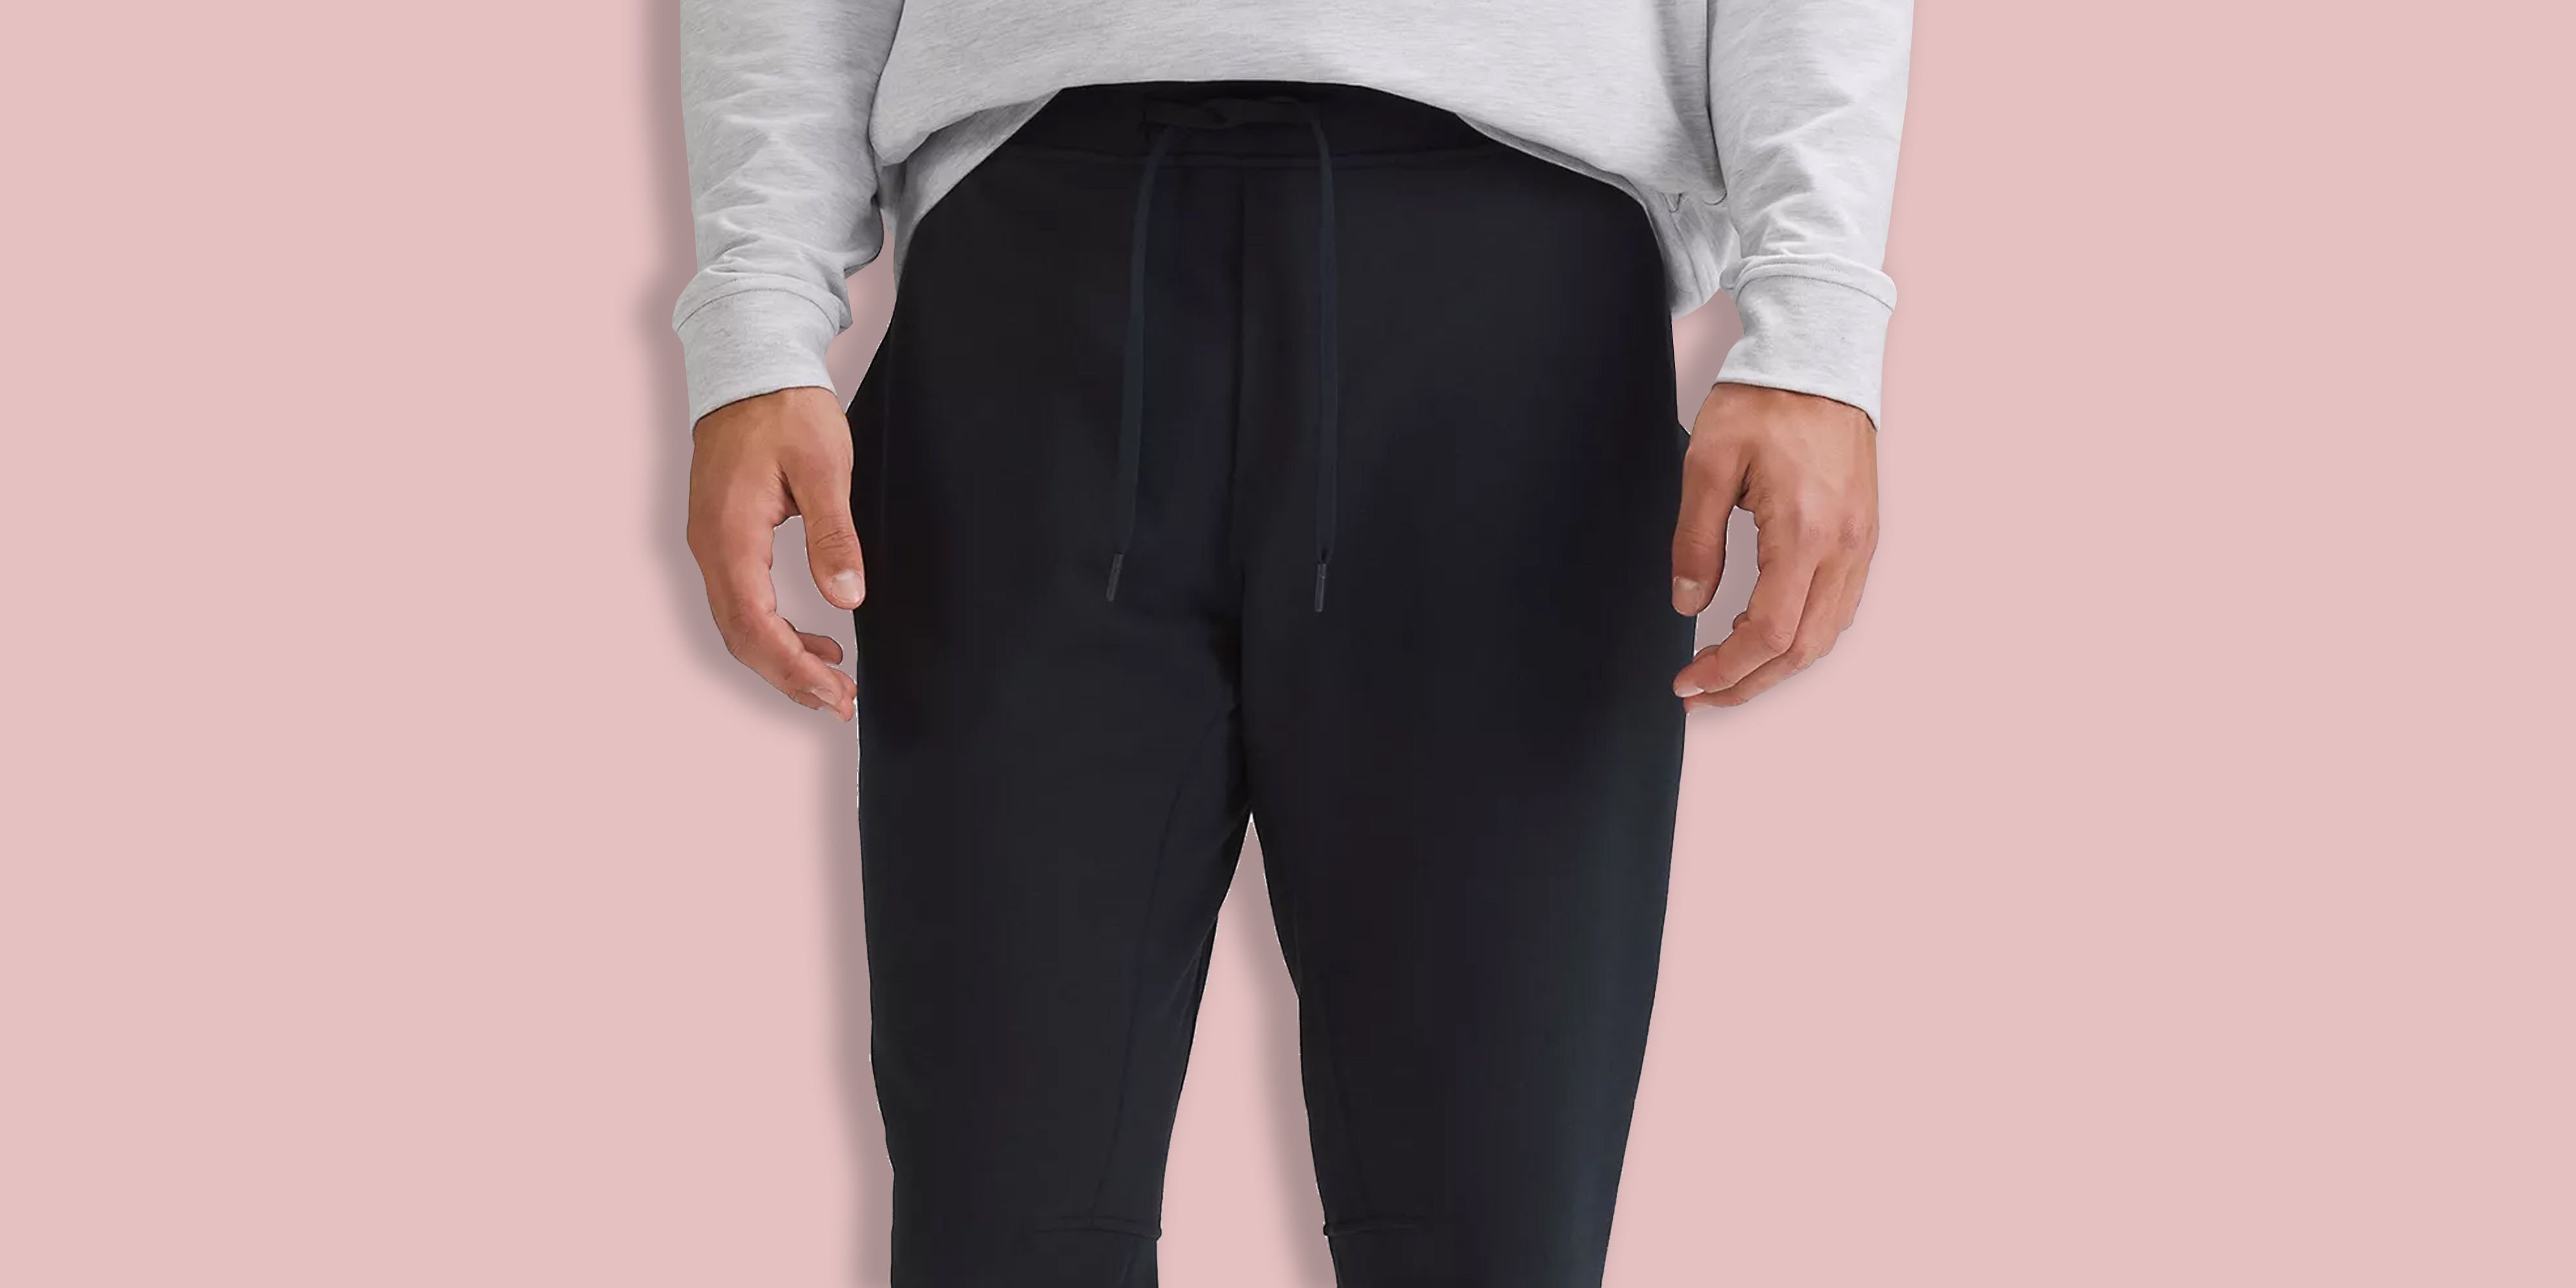 Lululemon new yoga sweatpants two-piece leggings pocket breathable